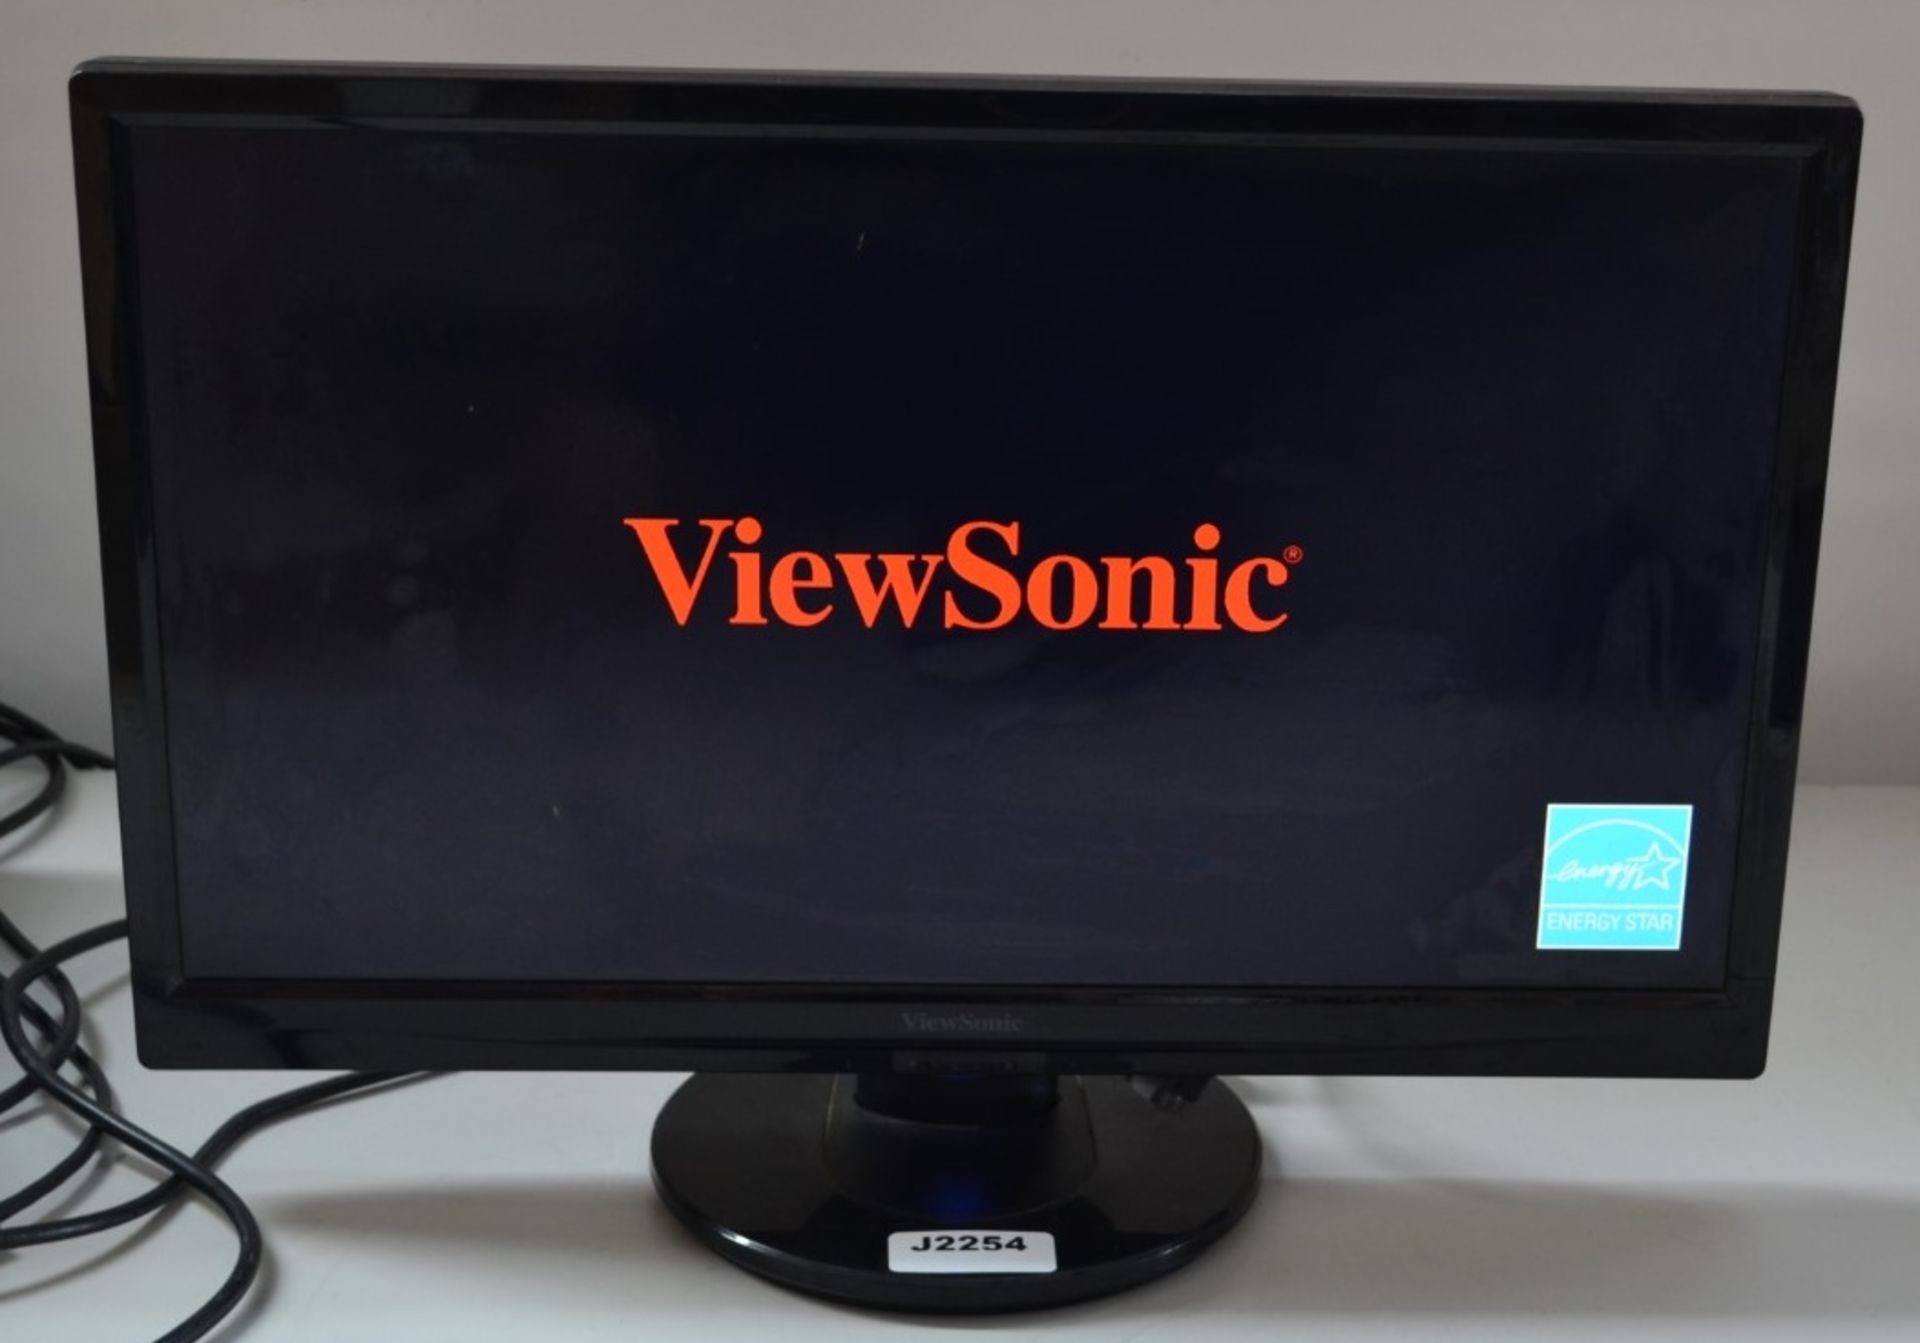 4 x View Sonic VA2246MLED 22" Widescreen PC Monitors - Ref J2254 - CL371 - Location: Altrincham WA14 - Image 4 of 4